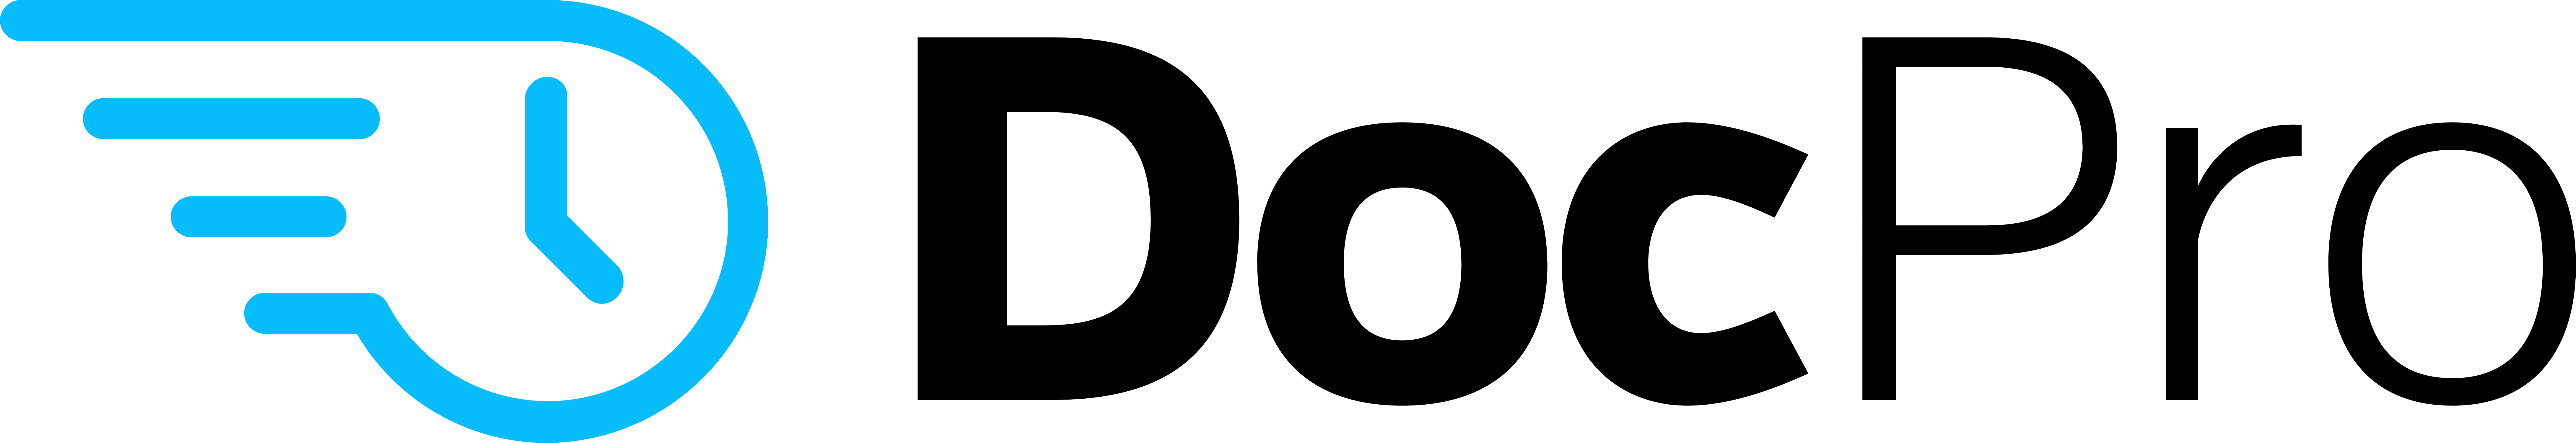 Main navbar logo